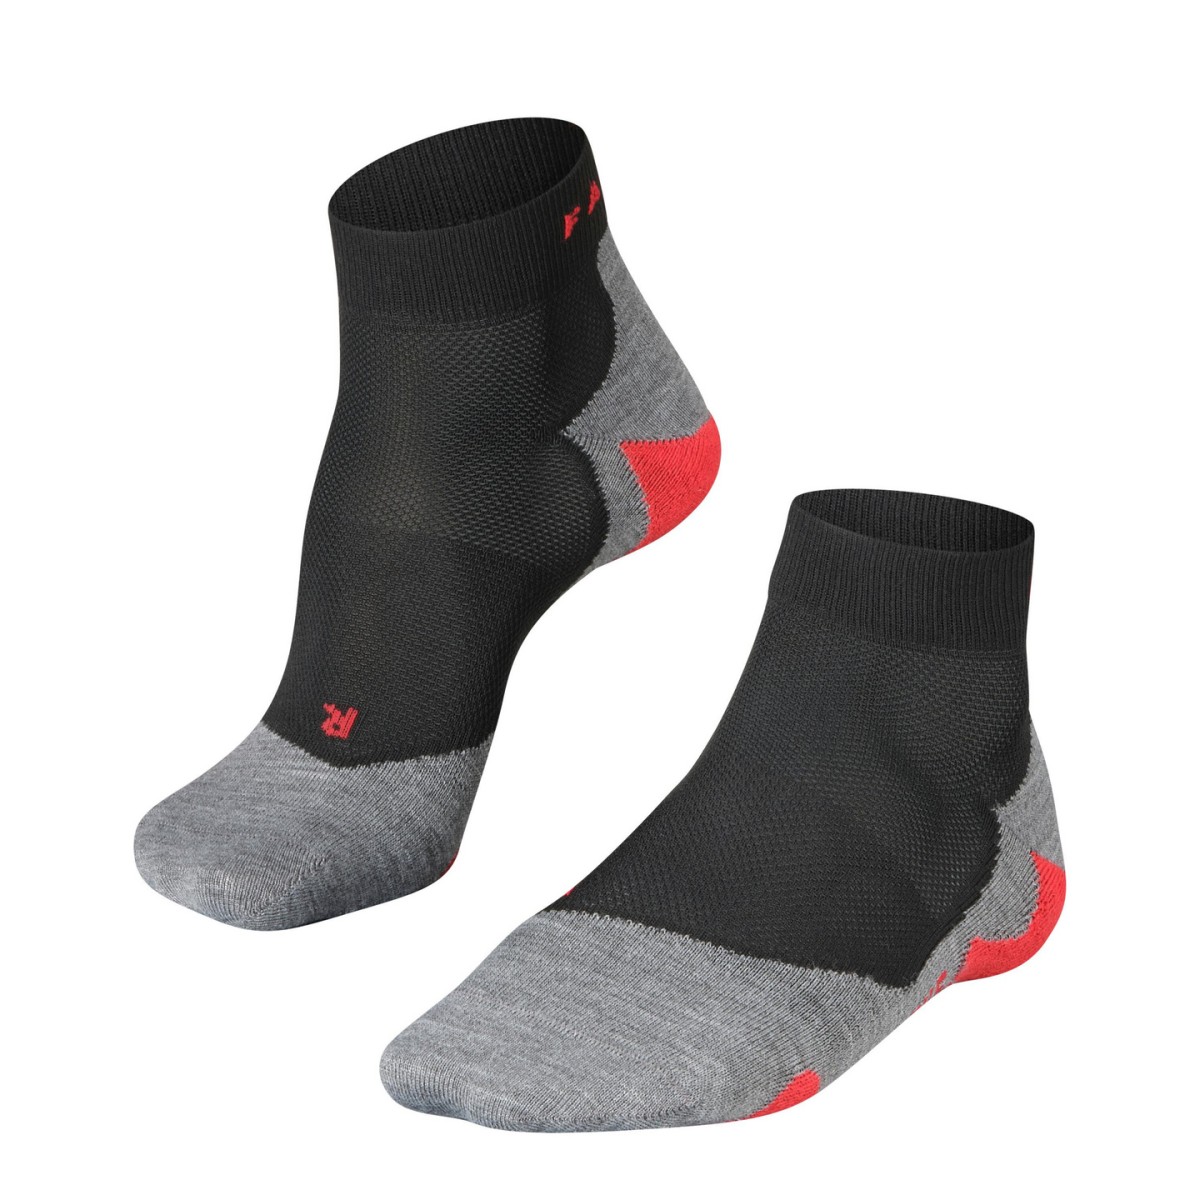 FALKE RU5 SHORT socks - black/grey/red